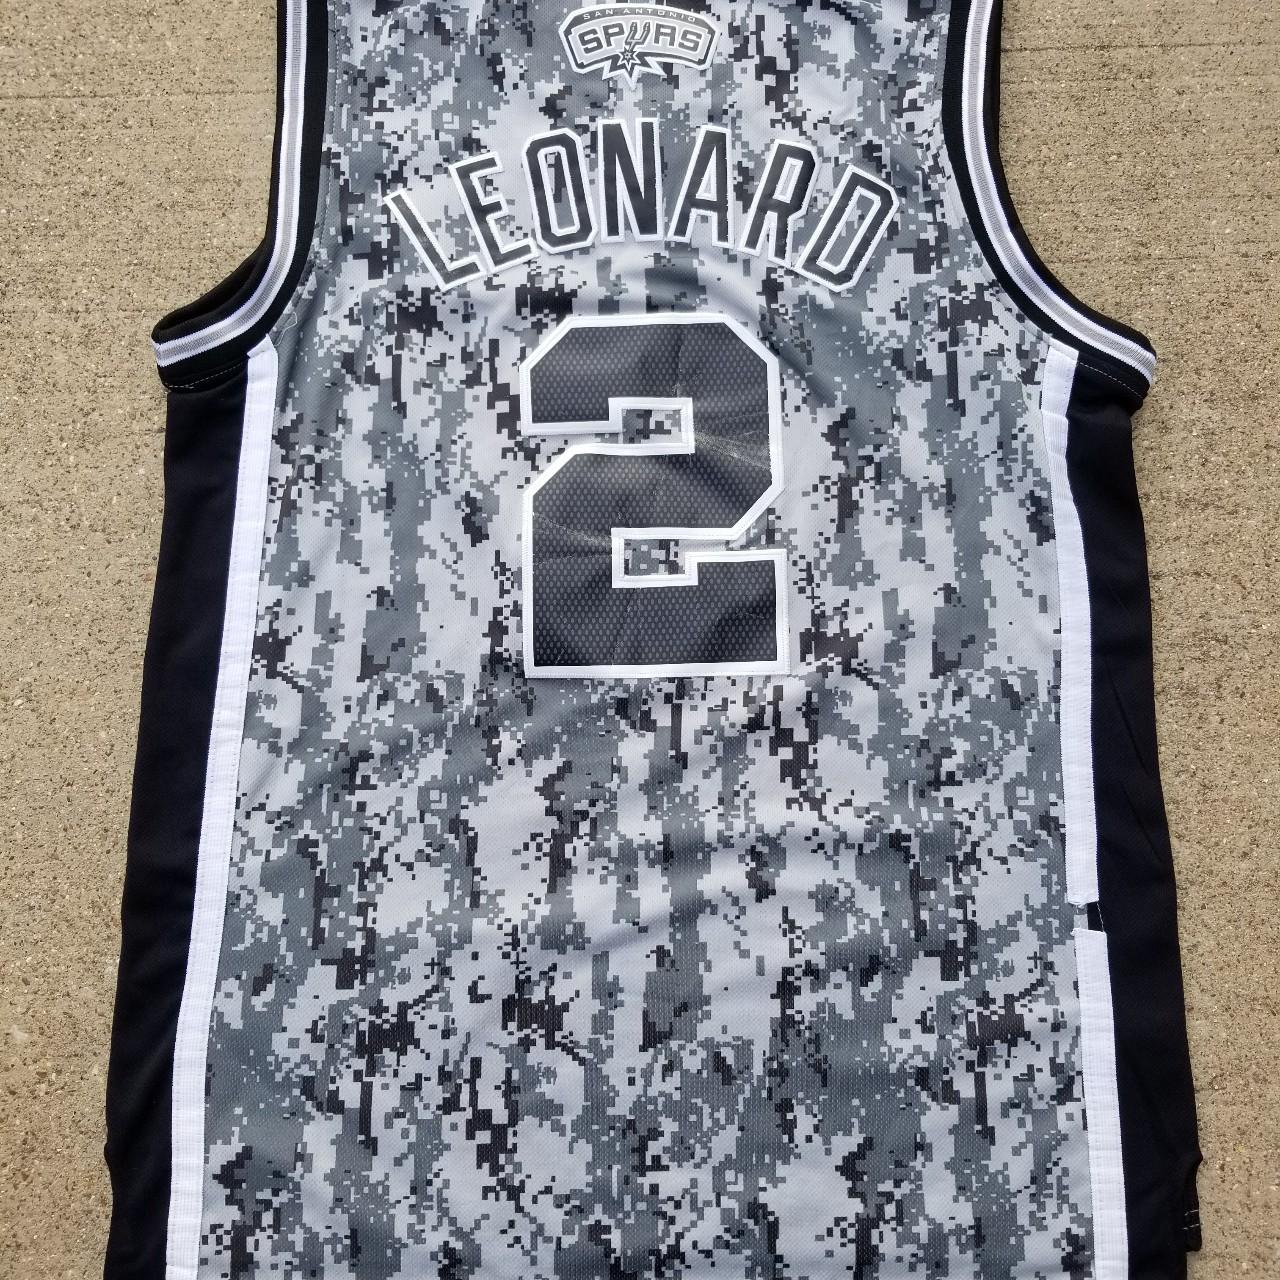 San Antonio Spurs Kawhi Leonard 2014 NBA Finals Adidas Shooting Jersey XL